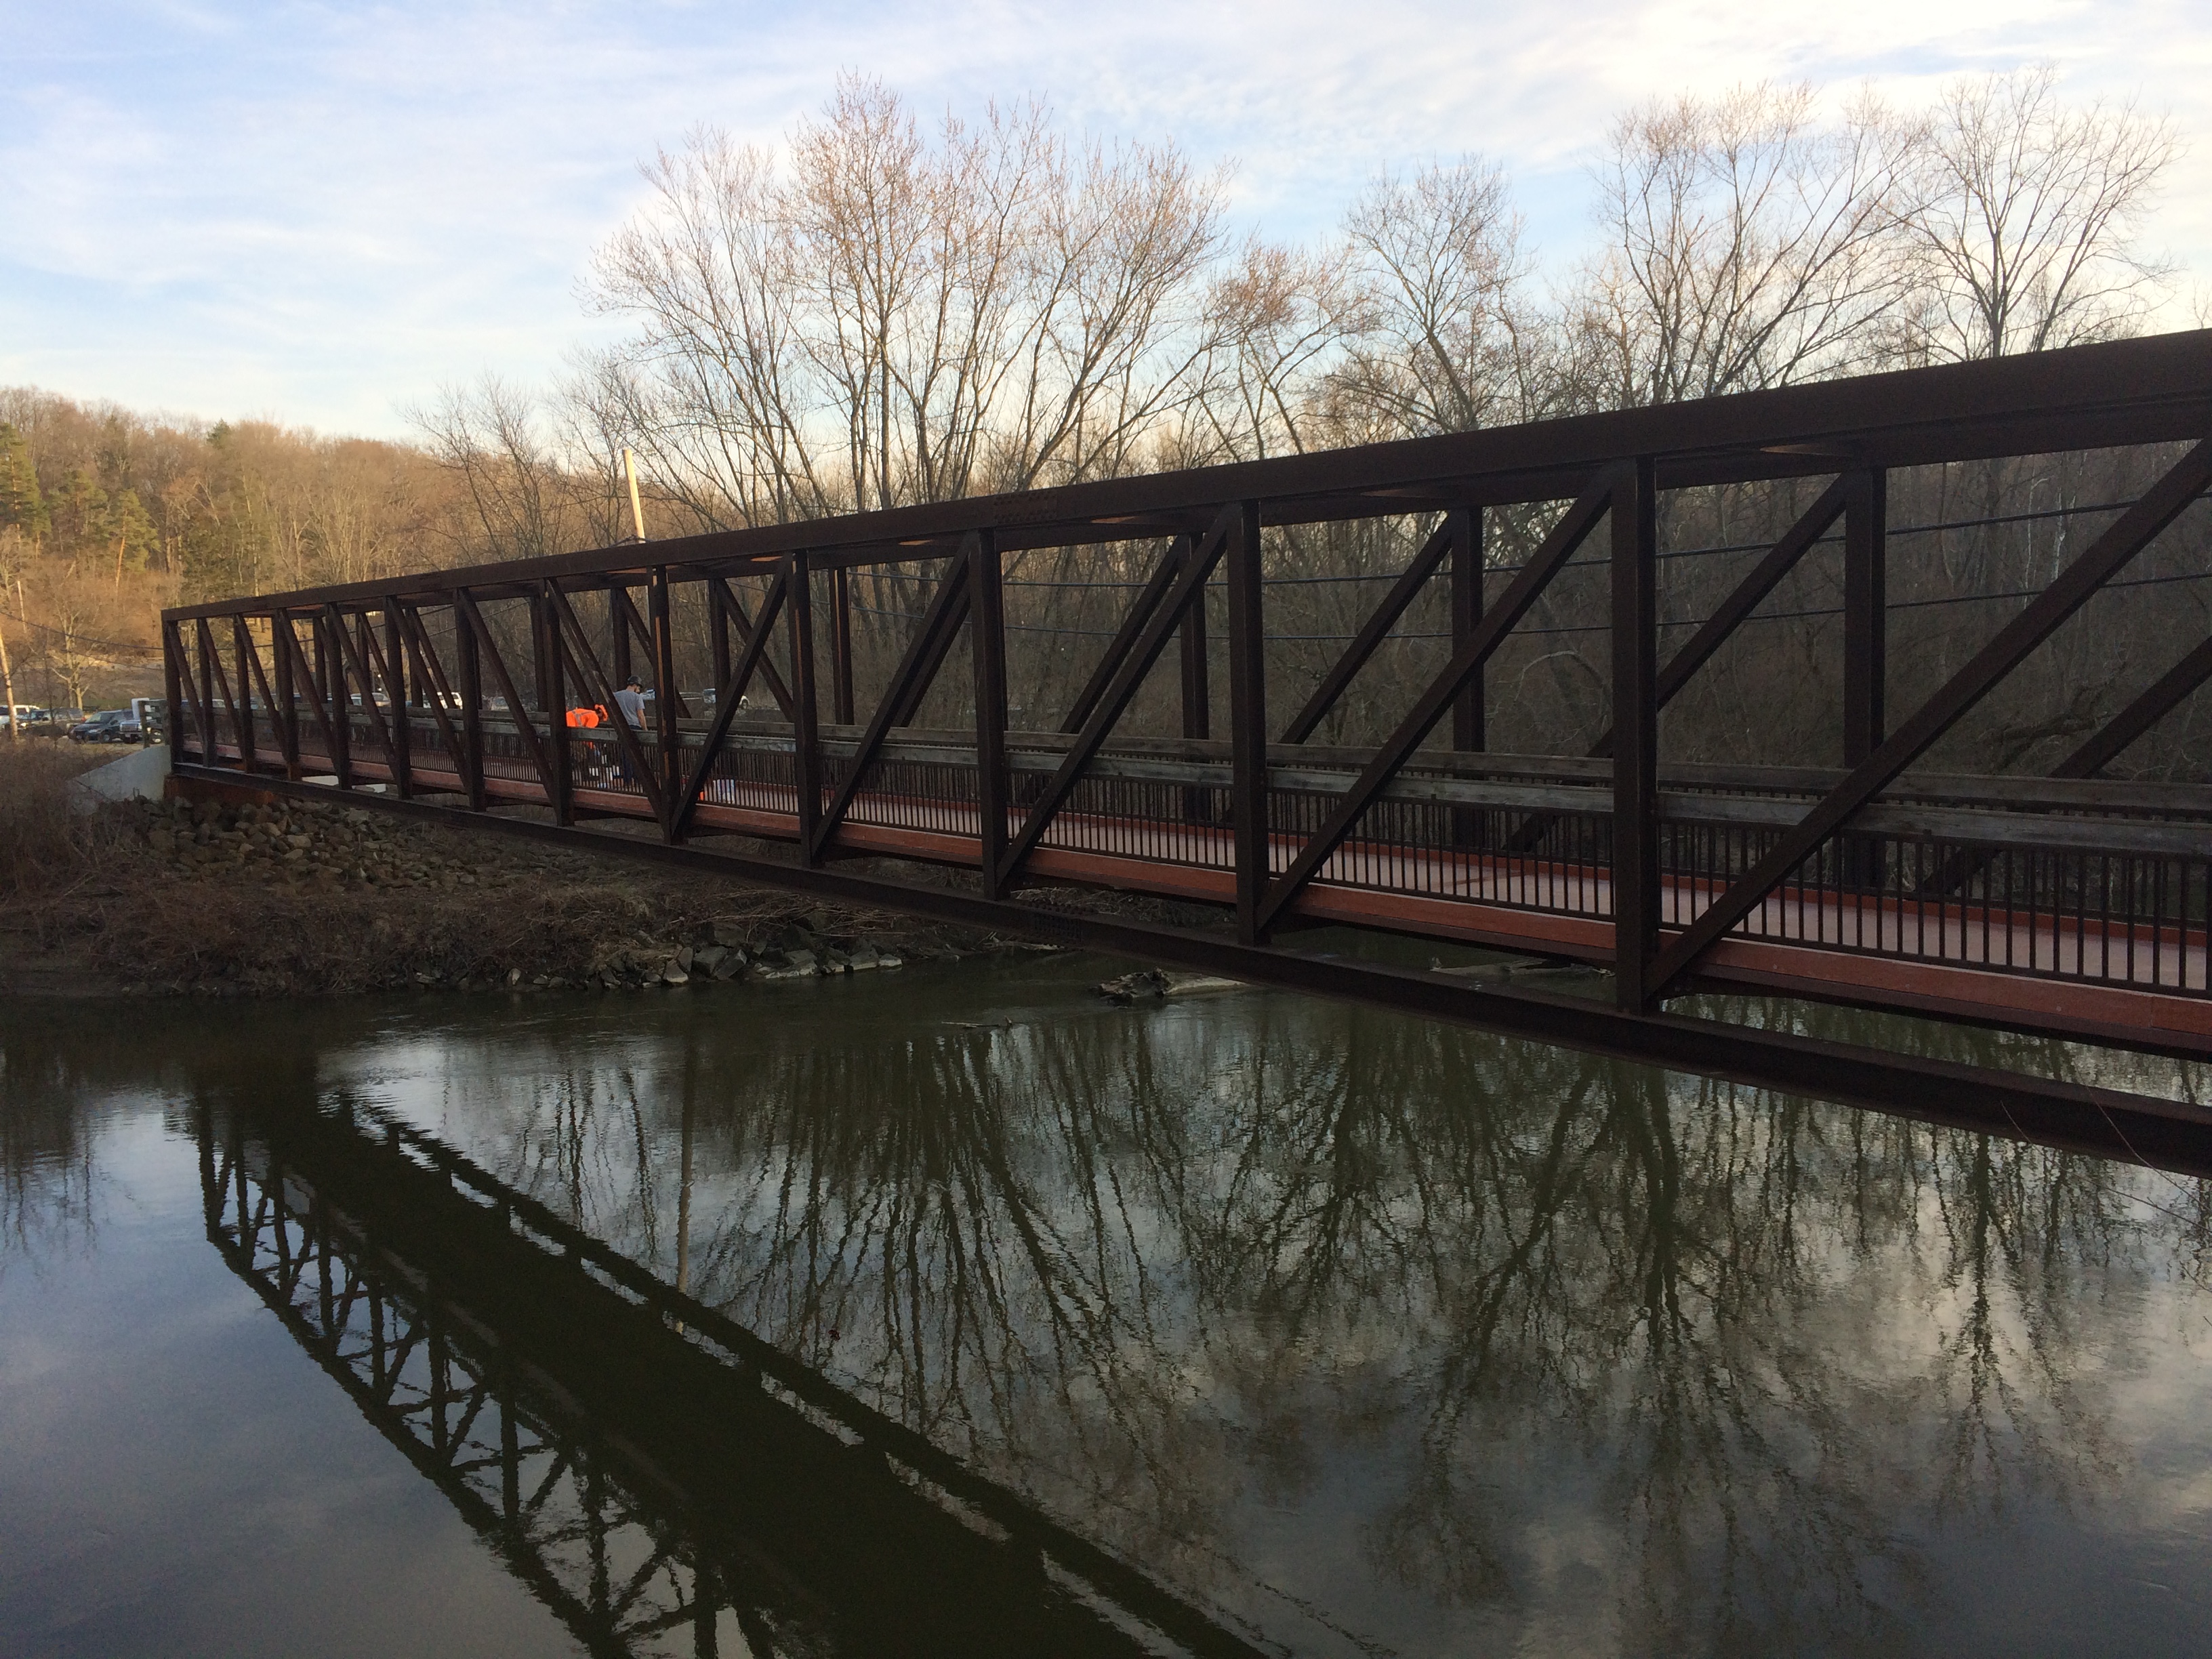 The fiber reinforced plastic (FRP) pedestrian bridge at Cuyahoga Valley National Park.